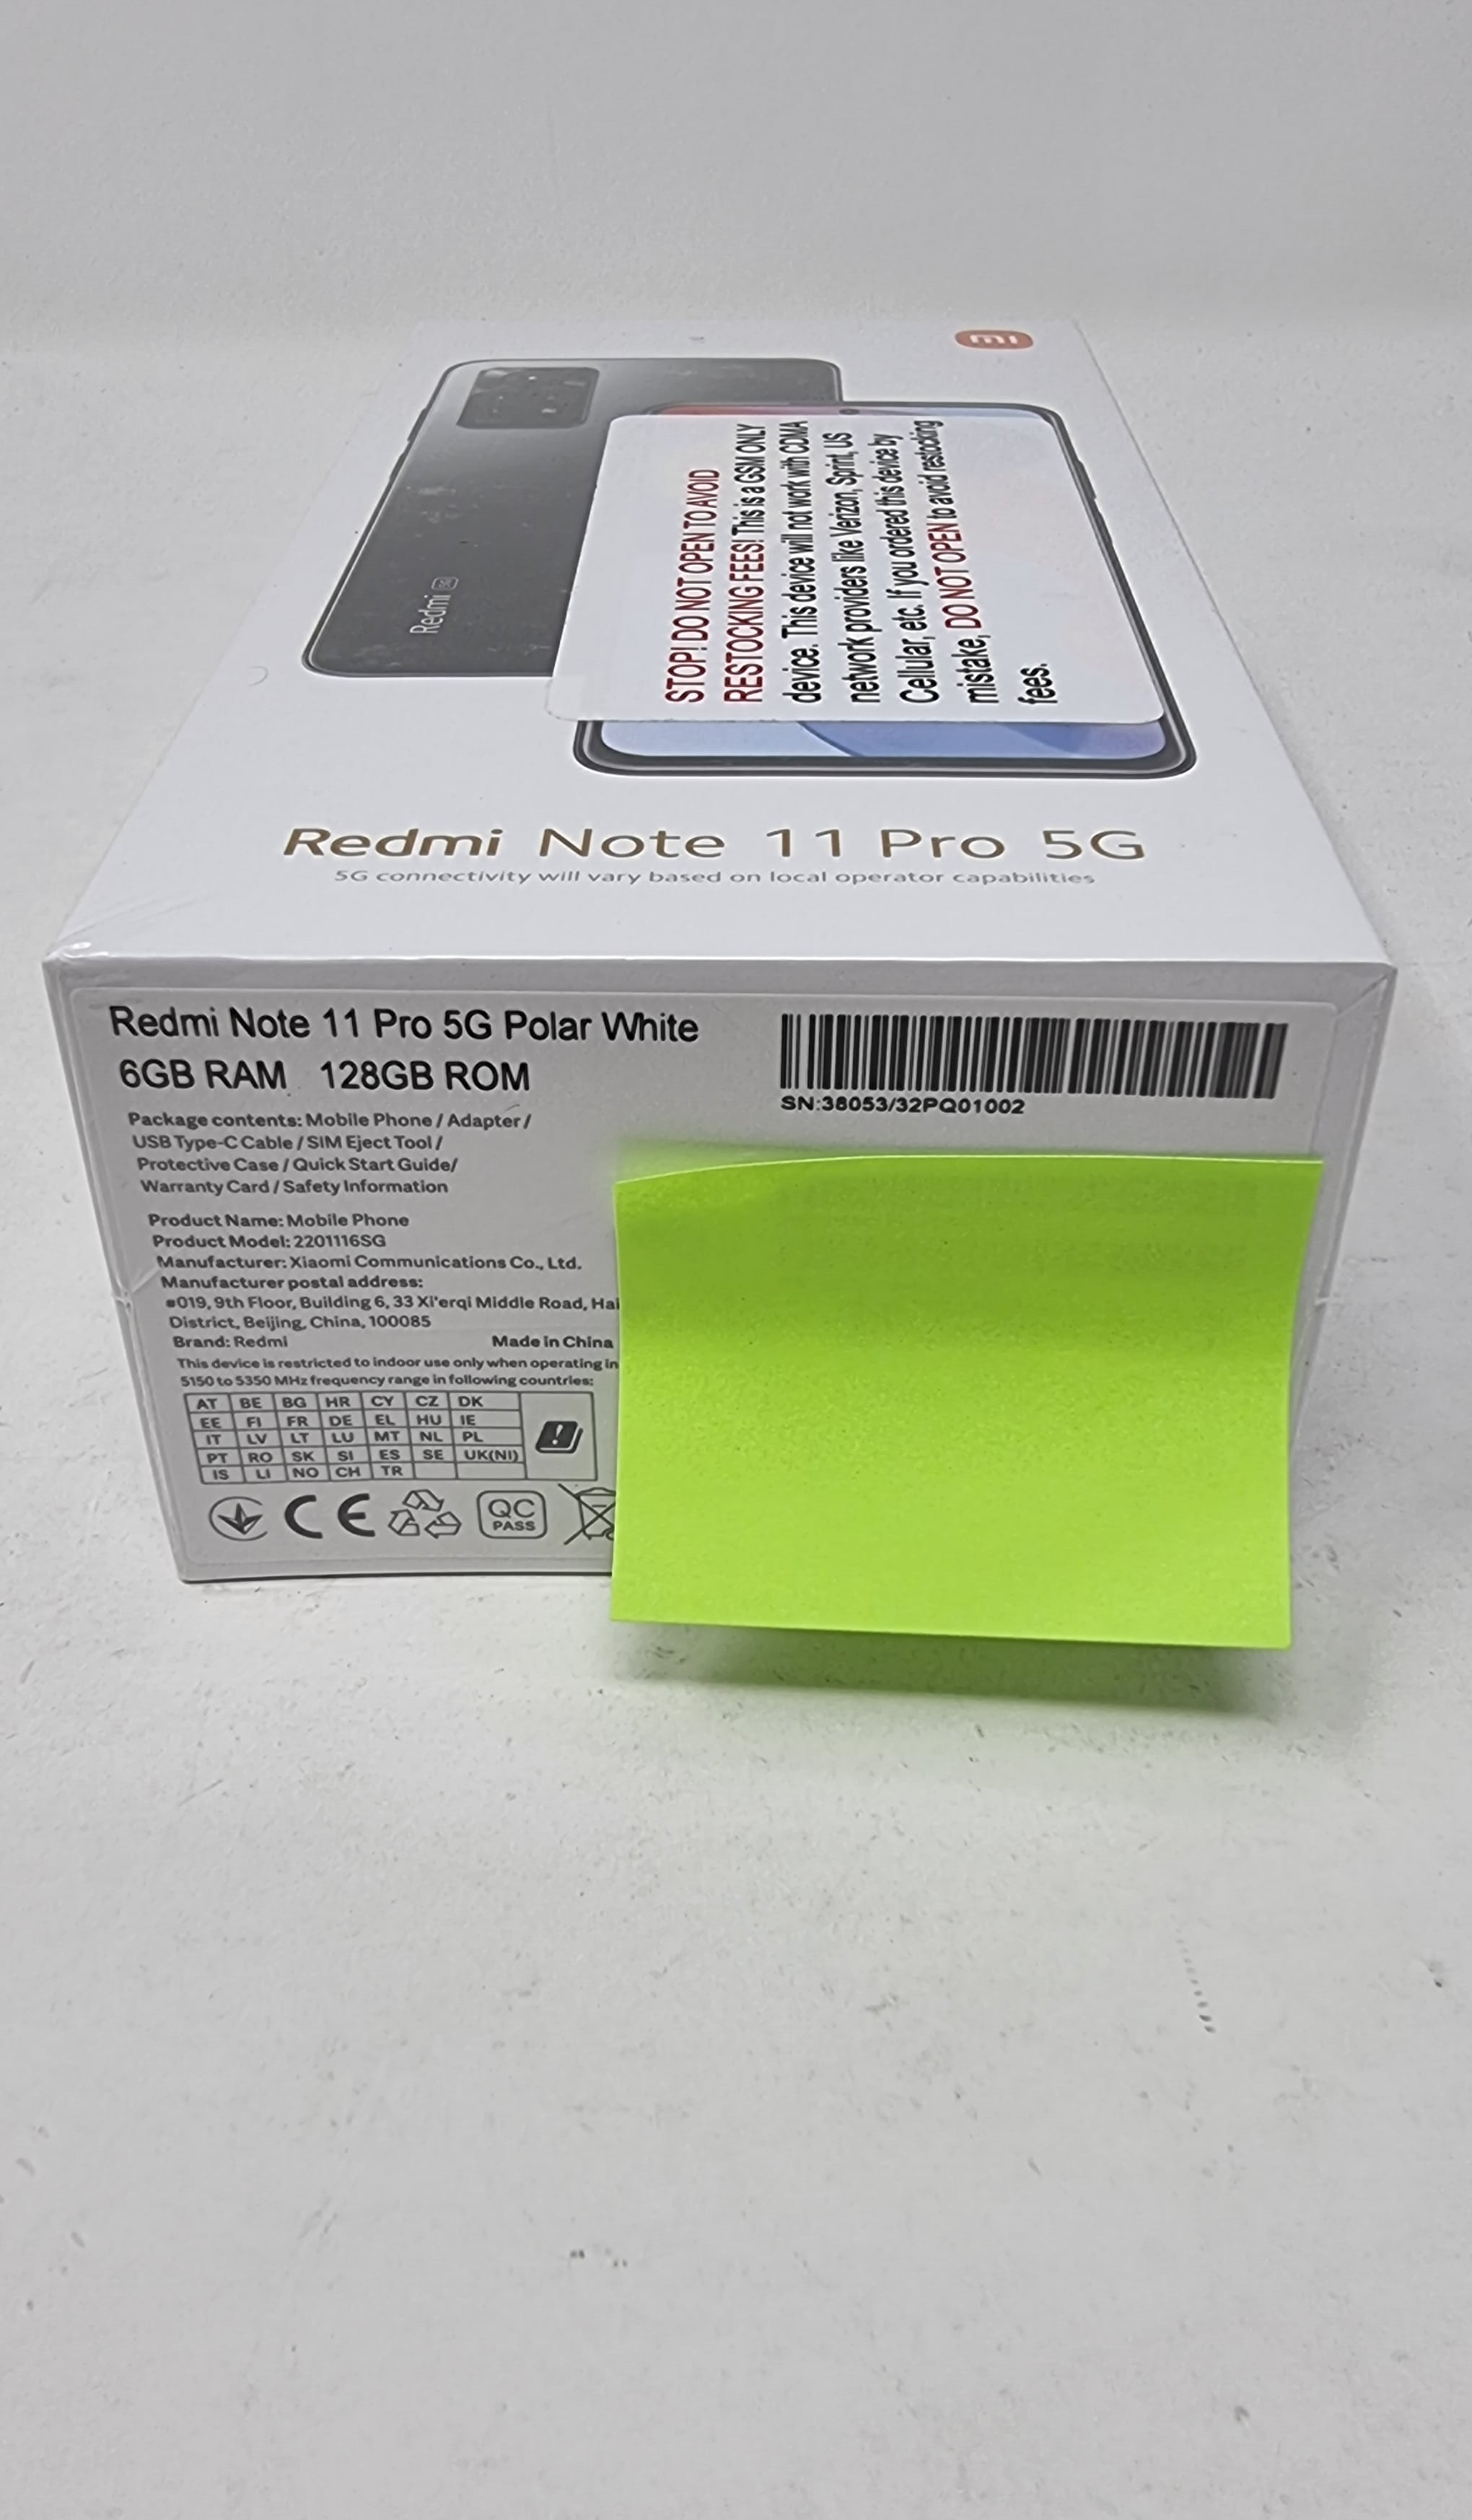 Xiaomi Redmi Note 11 Pro - Smartphone 6+128GB, 6.67” 120Hz FHD+ AMOLED  DotDisplay, MediaTek Helio G86, 108MP+8MP+2MP+2MP AI quad Camera, 5000mAh